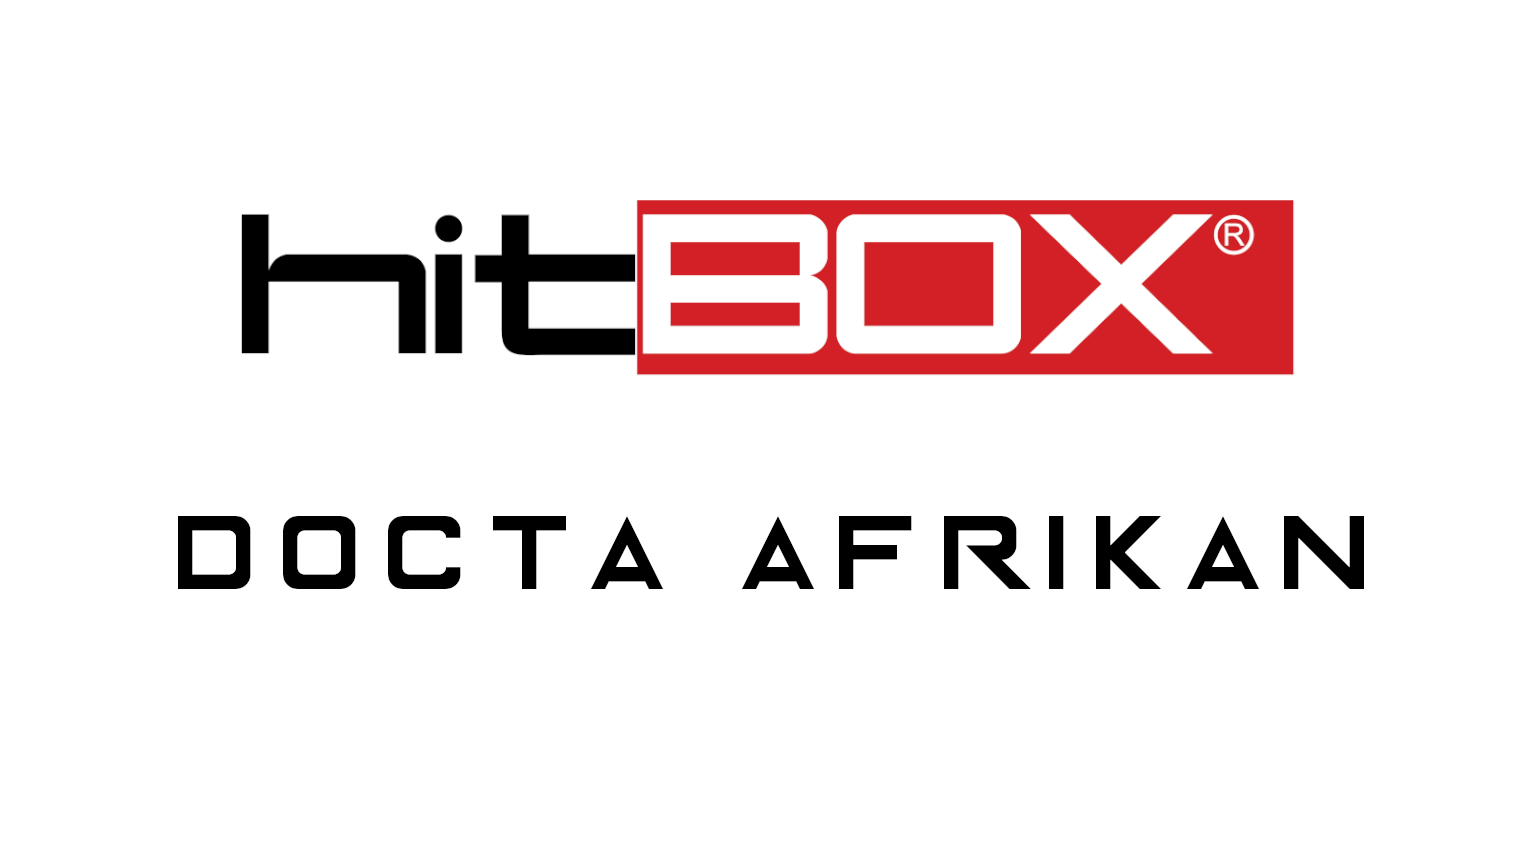 Welcome Docta Afrikan!